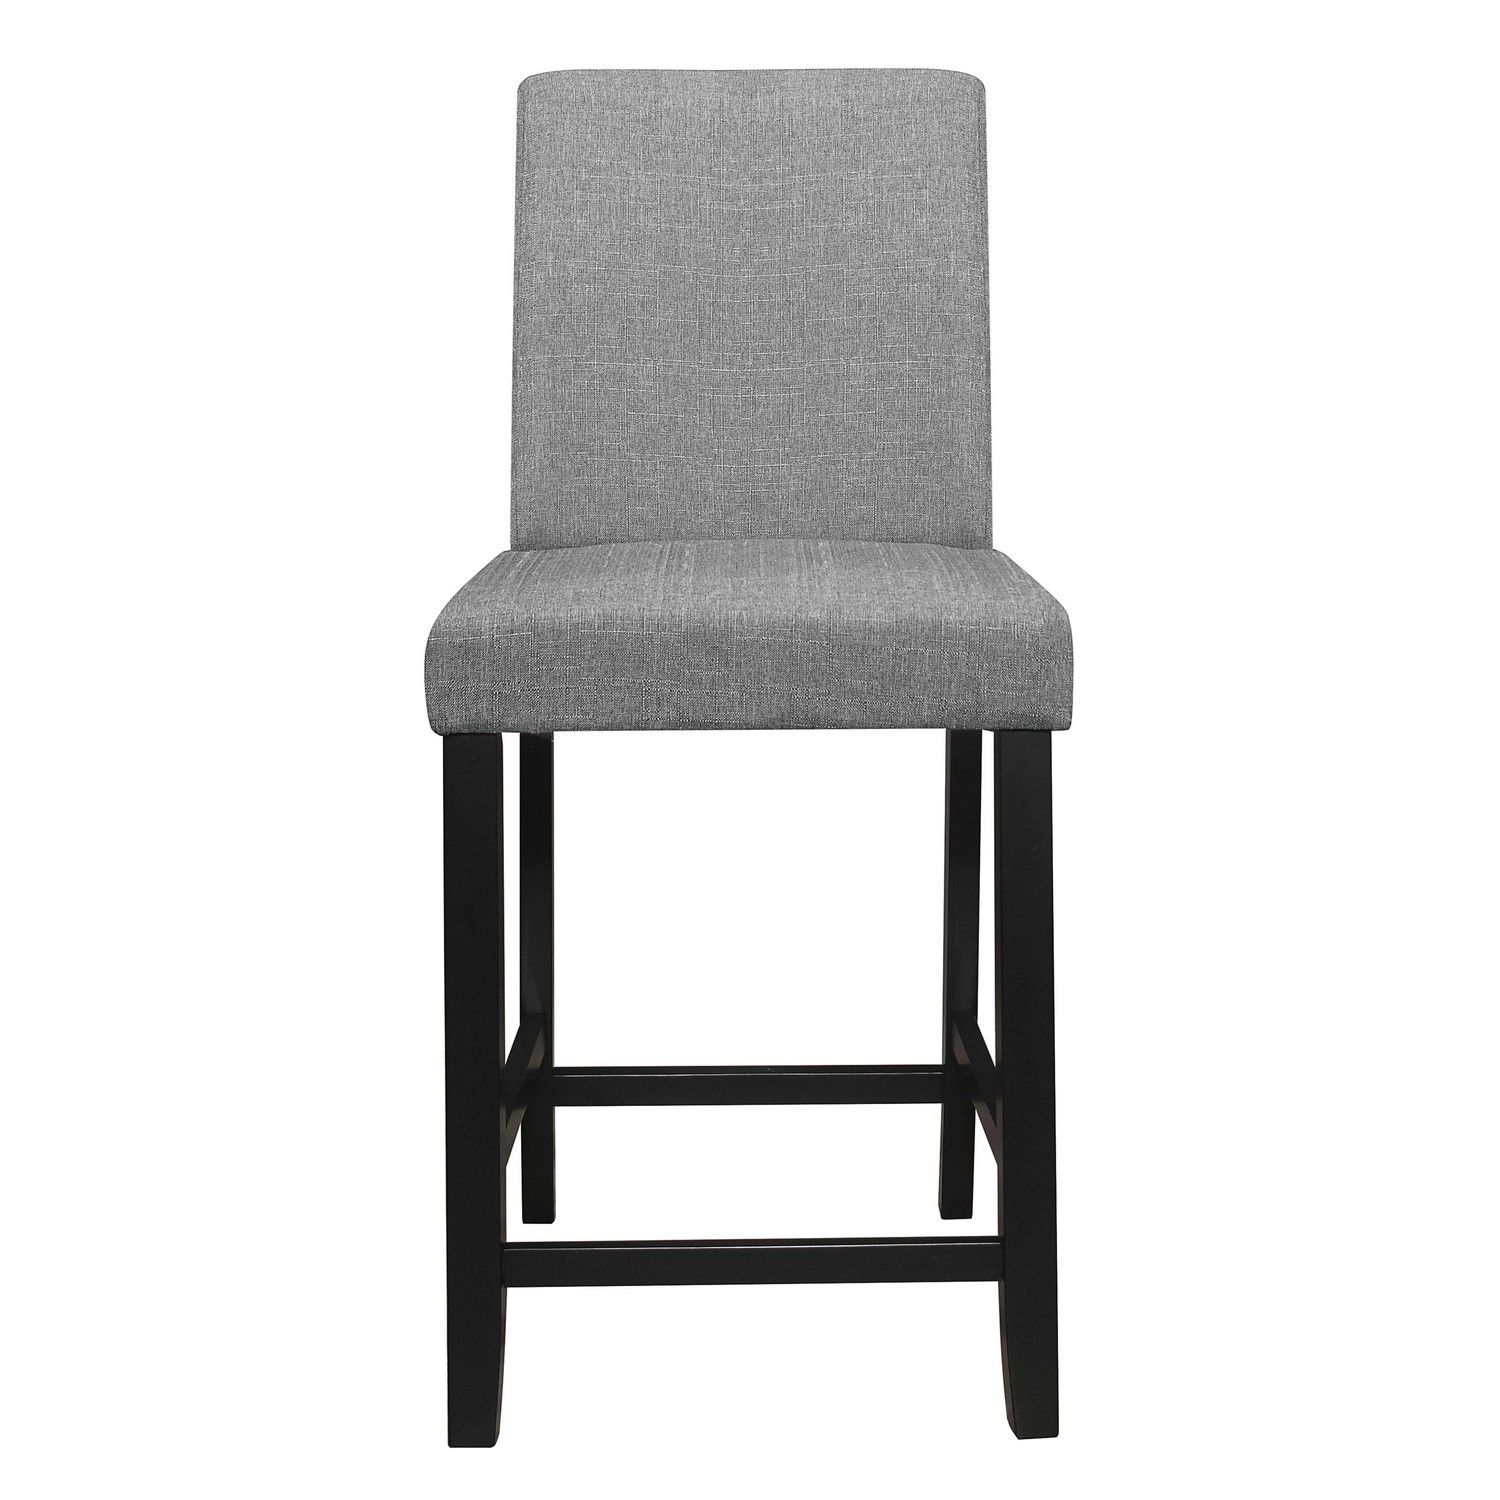 Homelegance Adina Counter Height Chair - Black